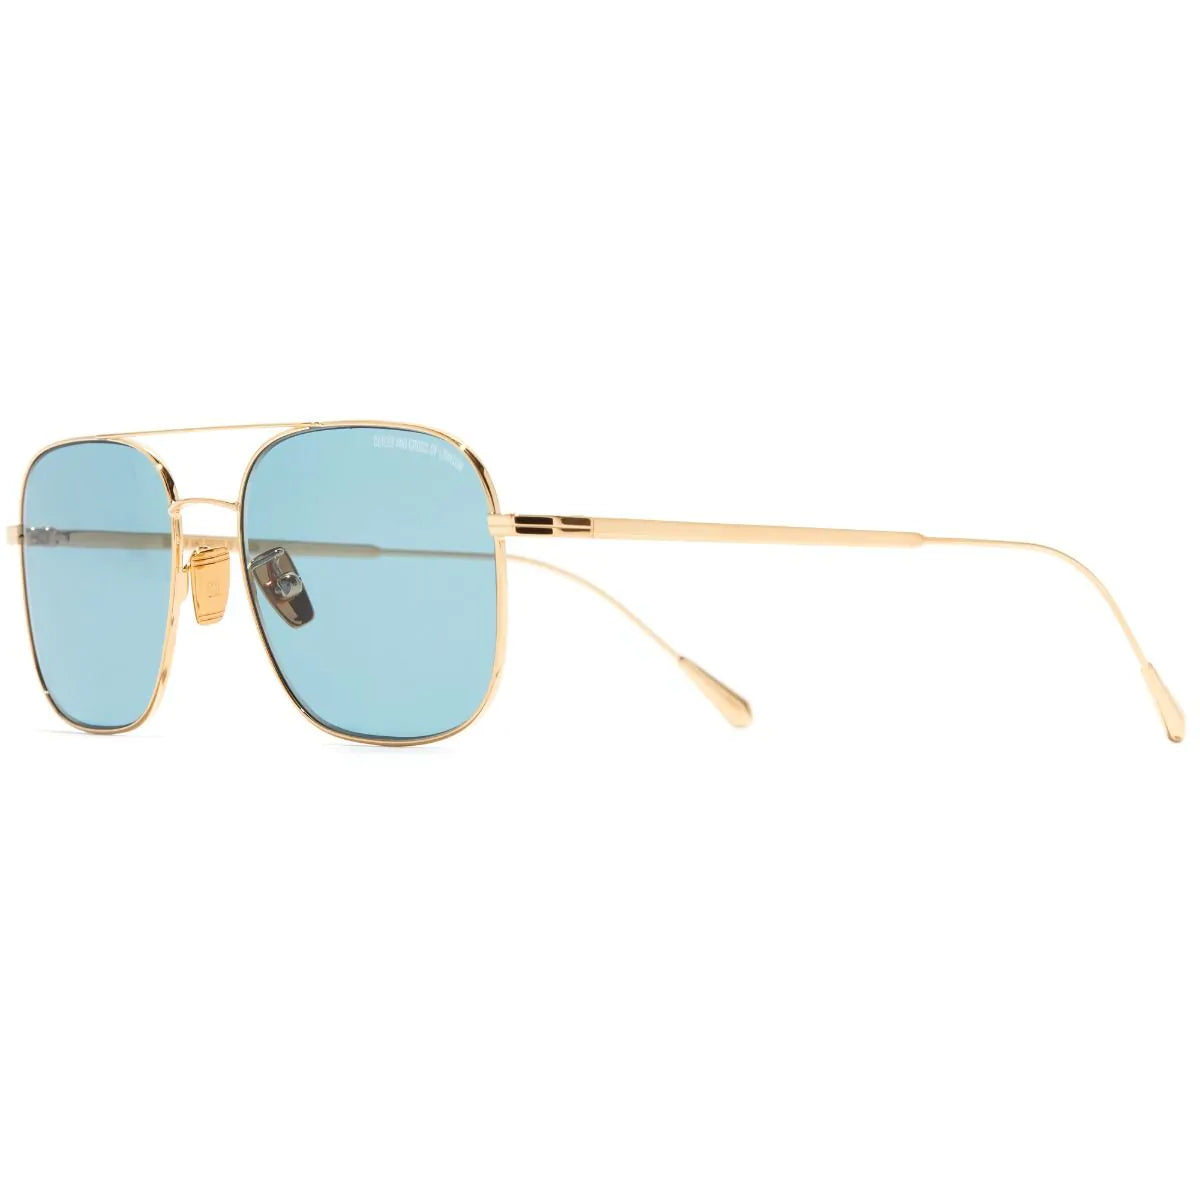 0003 Aviator Sunglasses - Gold 18K by Cutler and Gross